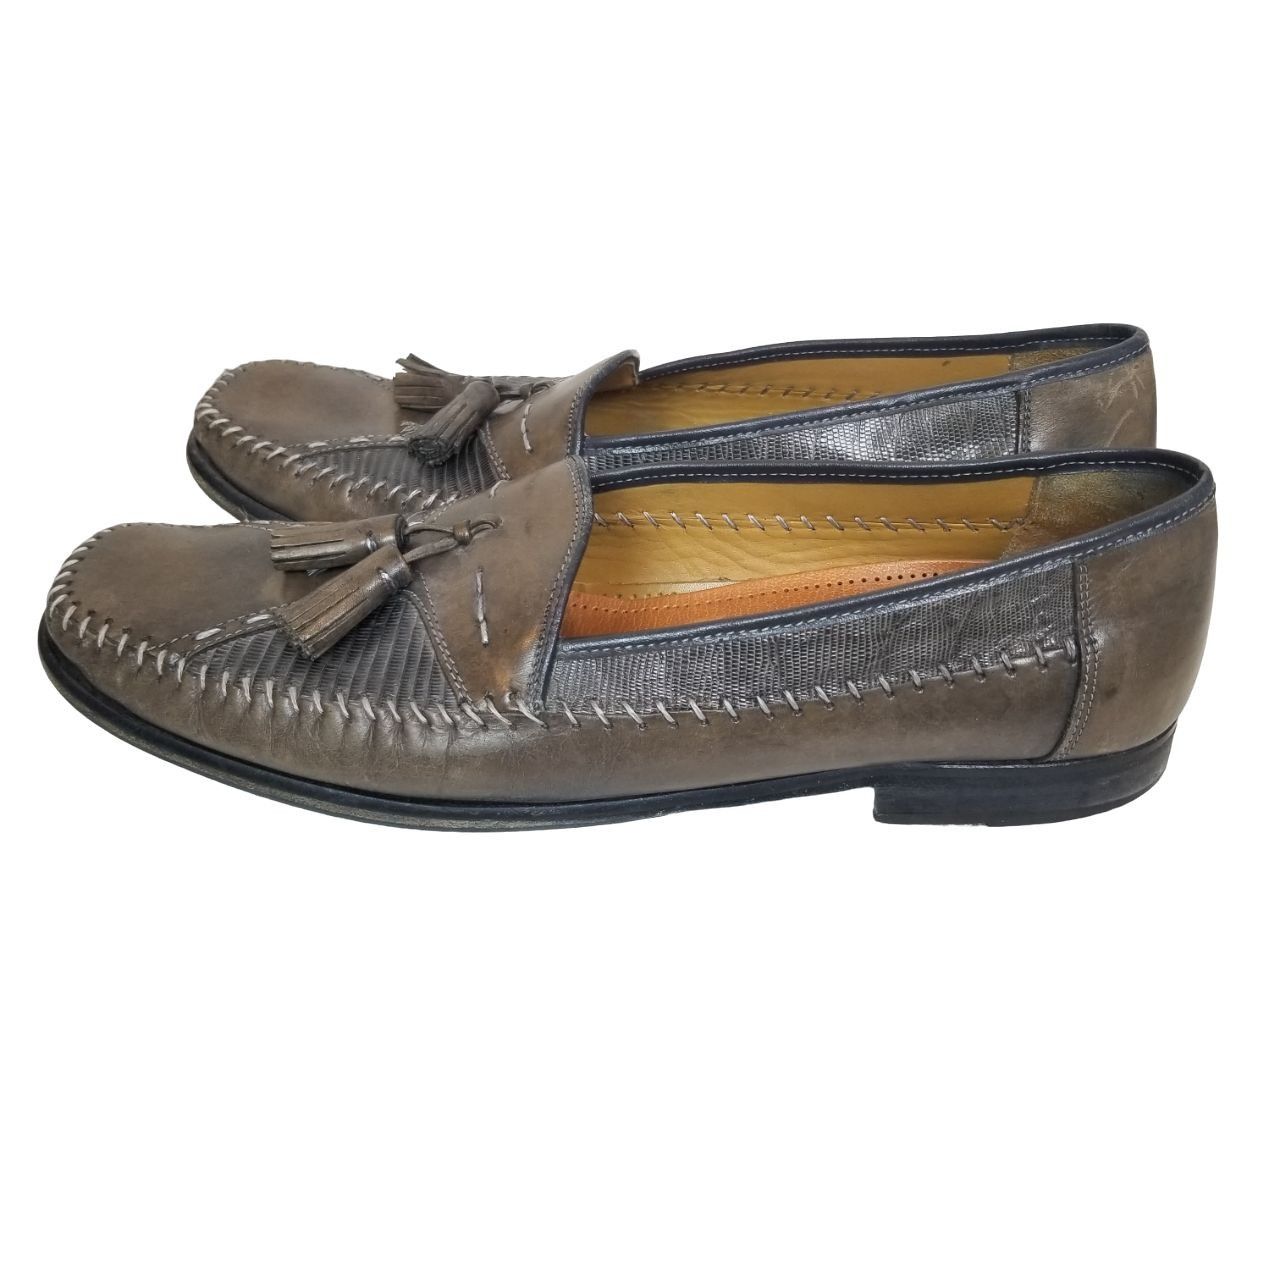 Sandro Moscoloni Sandro Moscoloni 11.5AA Leather Slip On Tassel Loafers Size US 11.5 / EU 44-45 - 6 Thumbnail